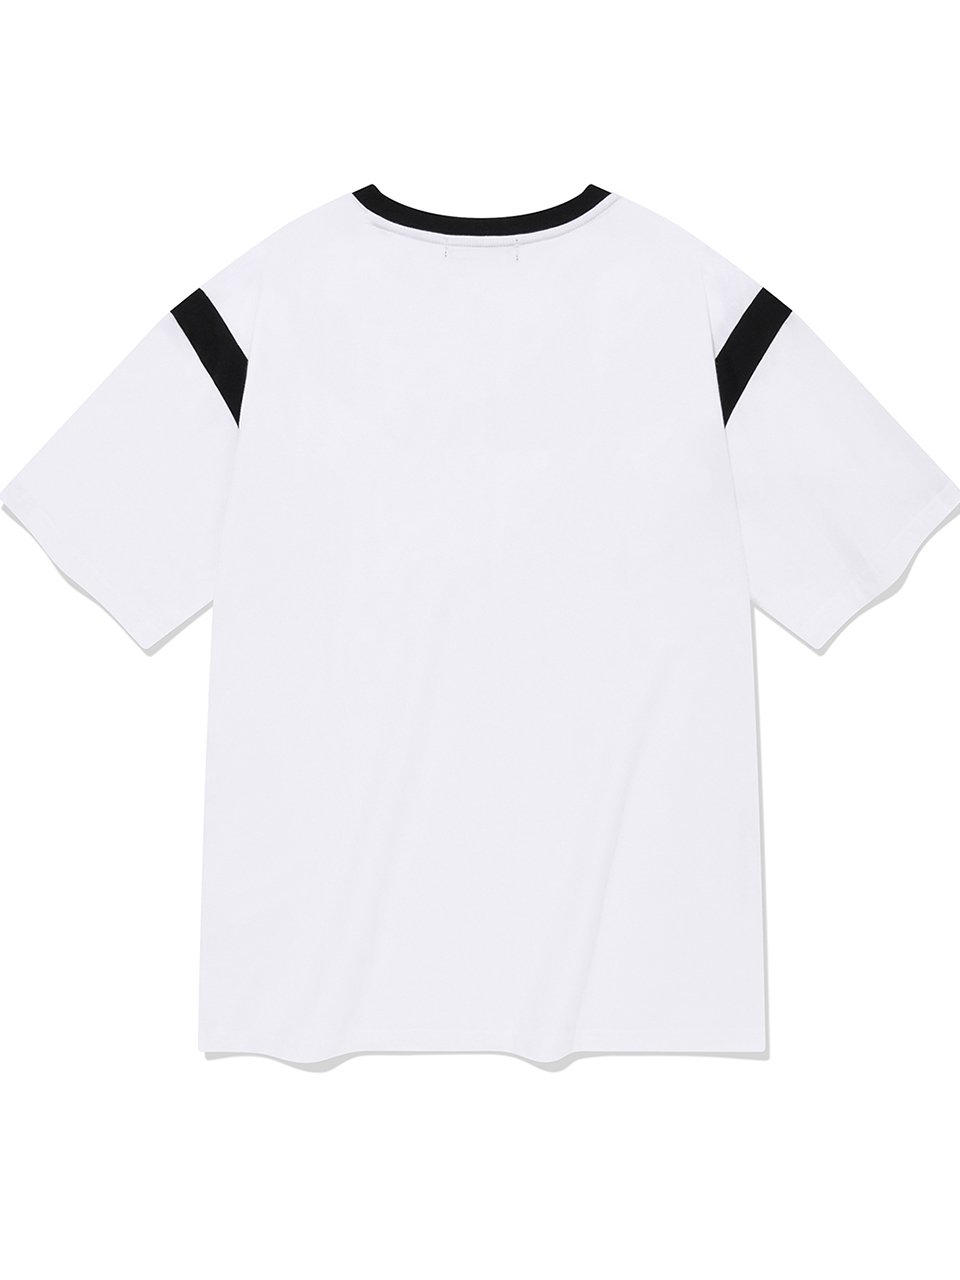 SP 서클 로고 바시티 브이넥 티셔츠-화이트